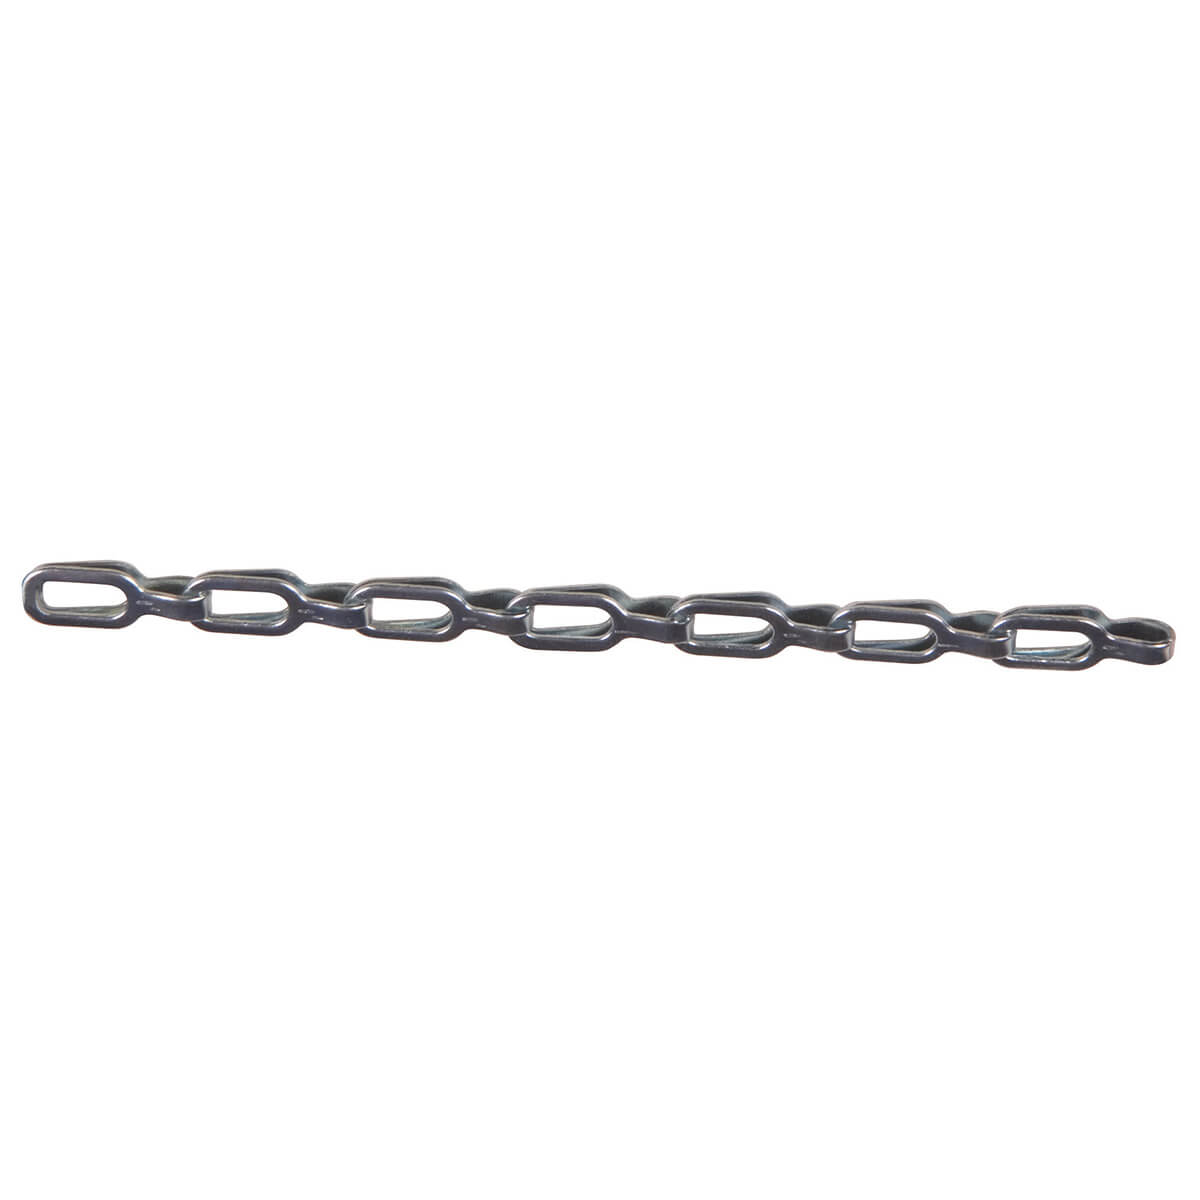 Furnace Chain - Steel